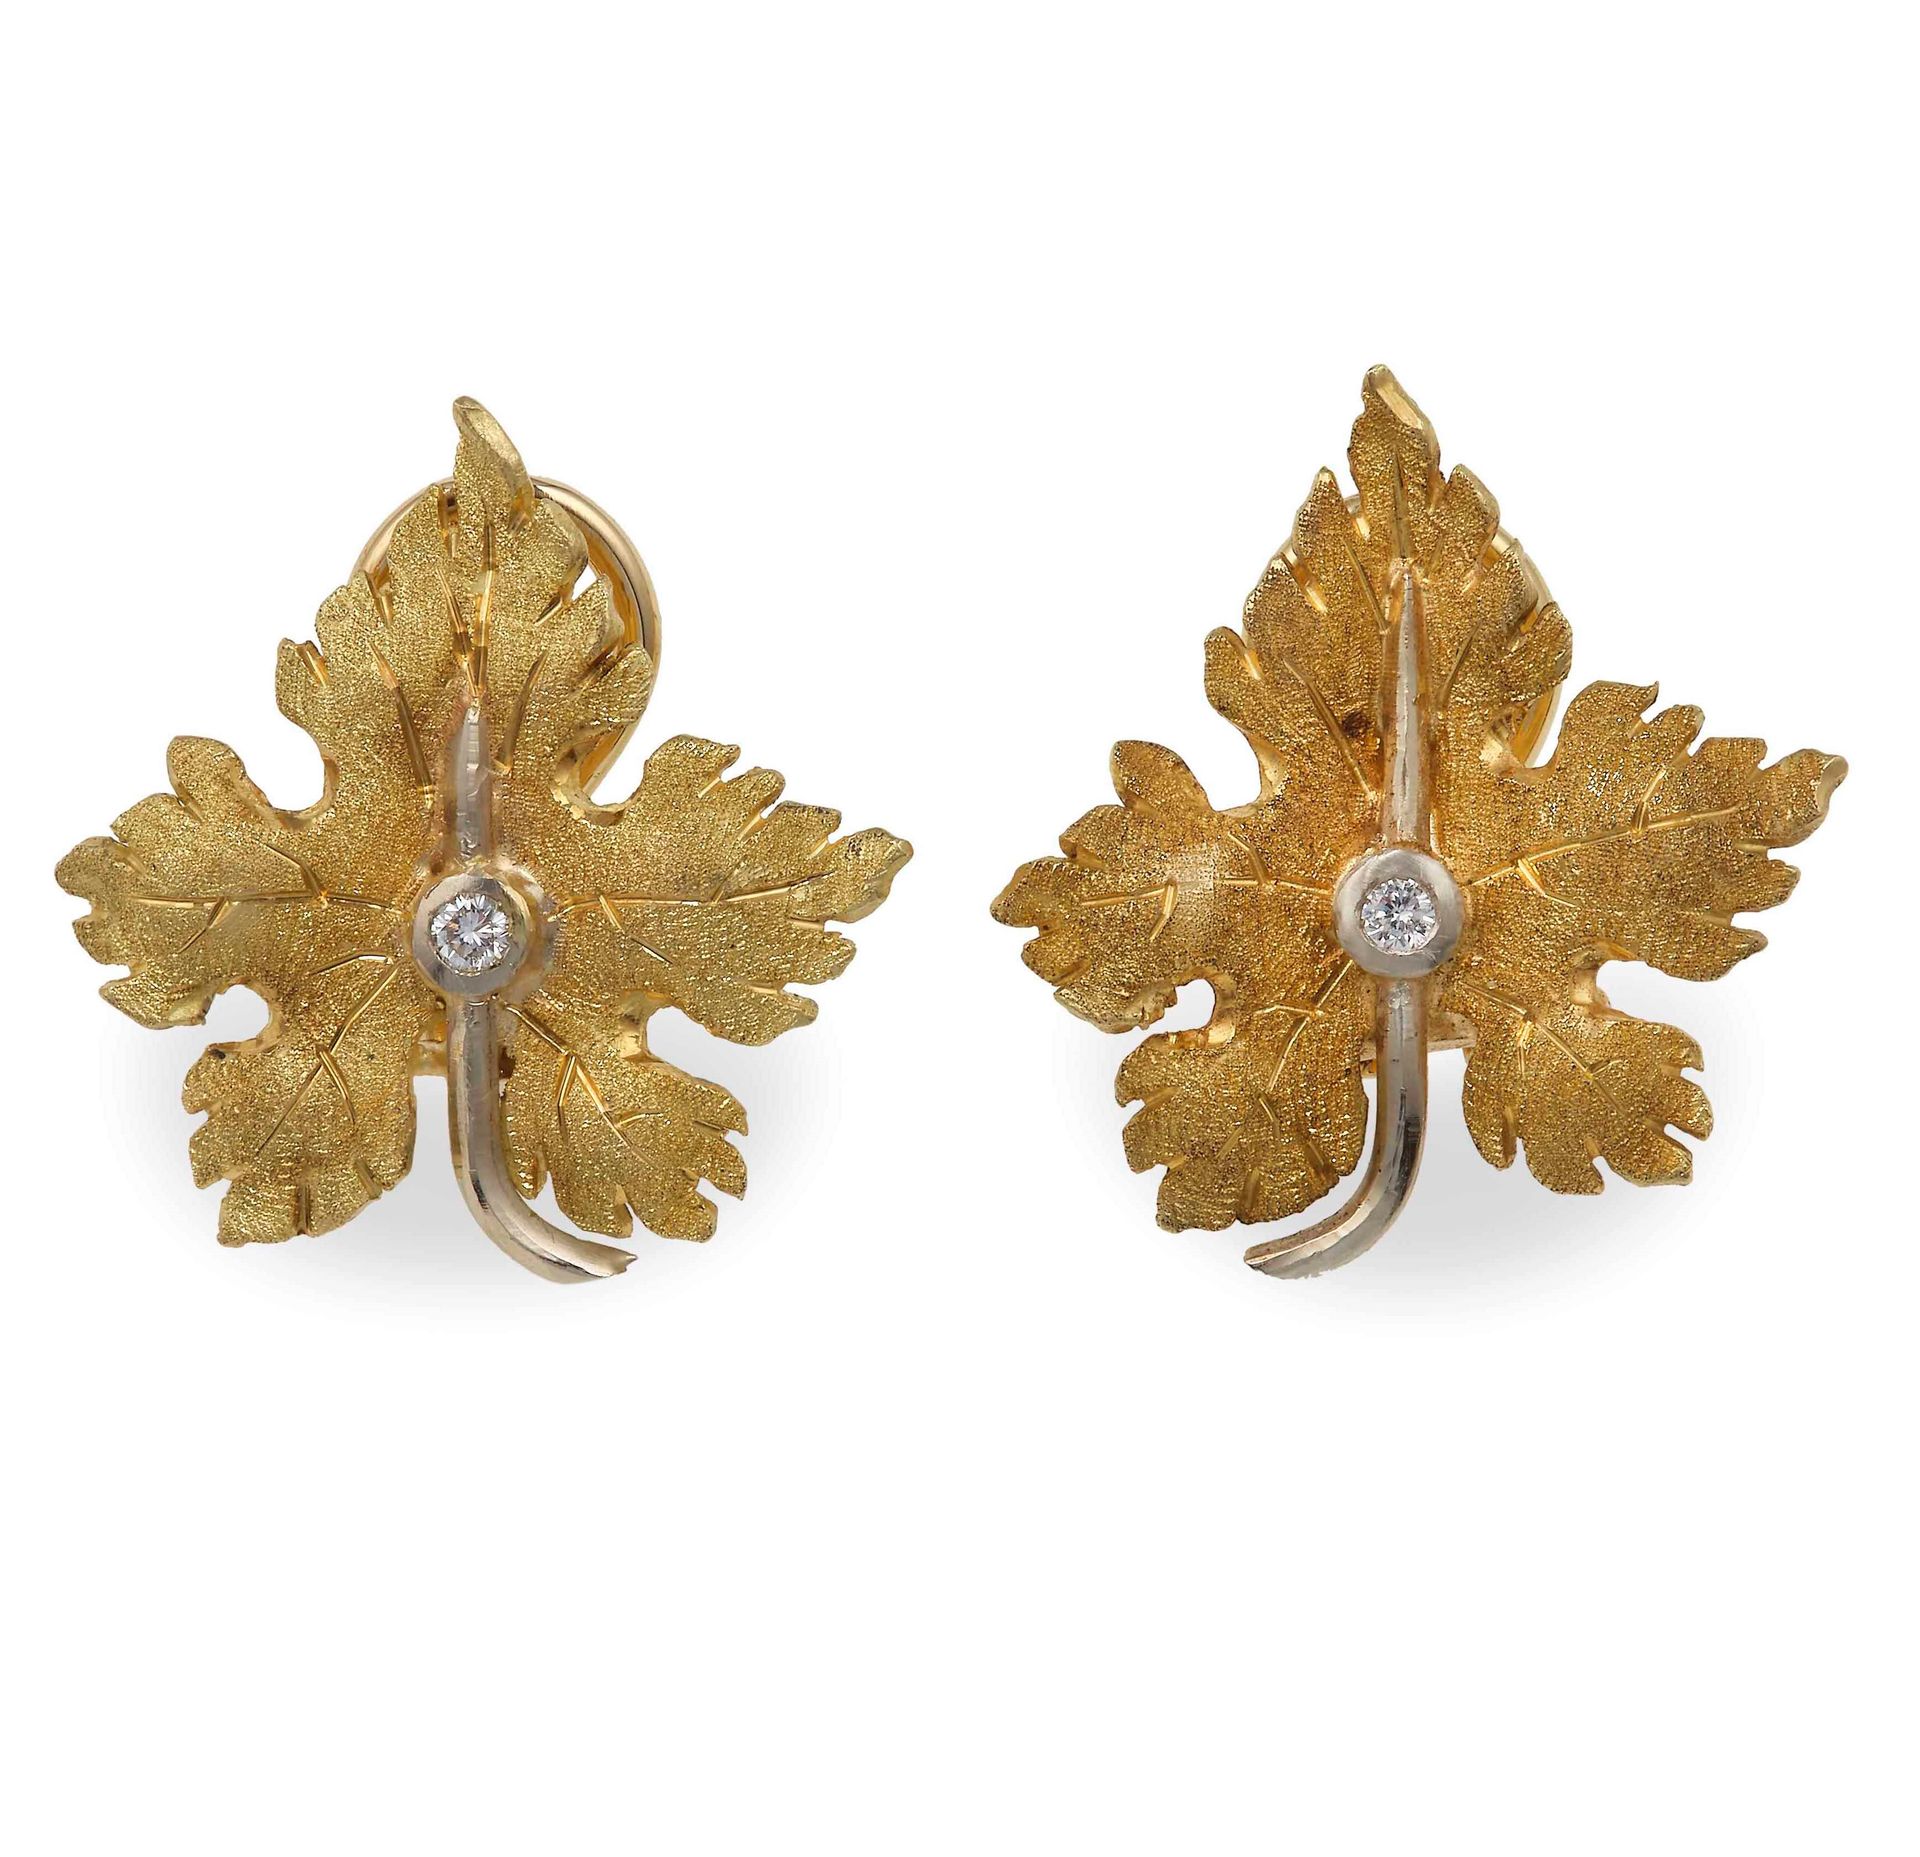 Pair of gold and diamond earrings. Signed M. Buccellati glatte und satinierte Fa&hellip;